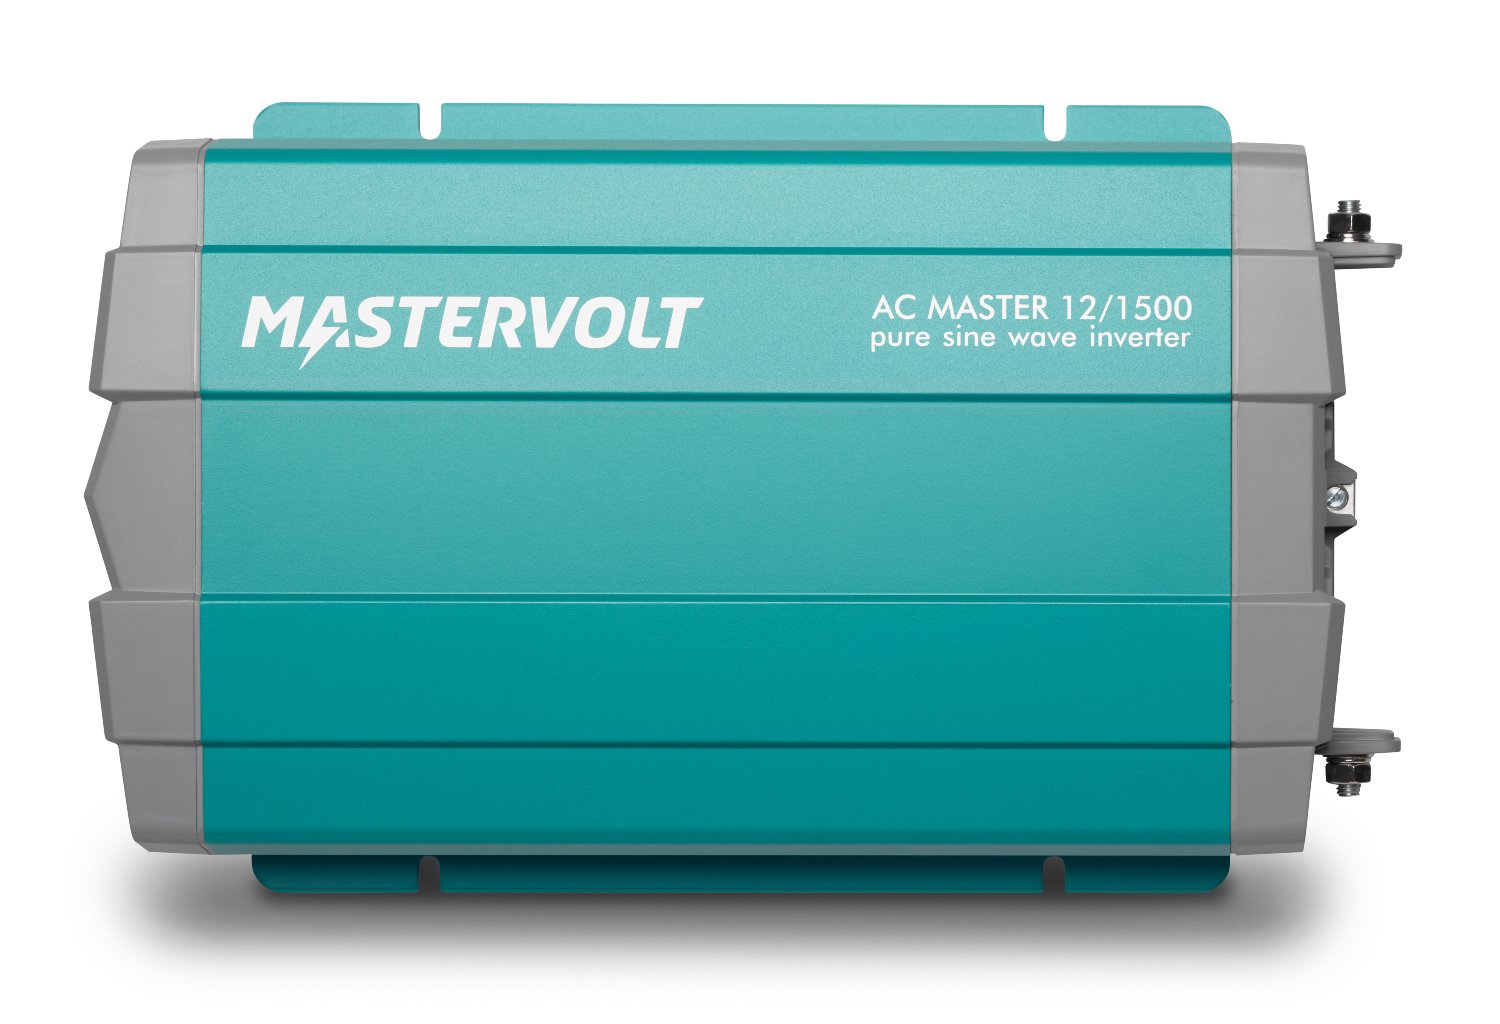 Mastervolt-AC-Master-Inverter-12-1500-front-Fischer-Panda